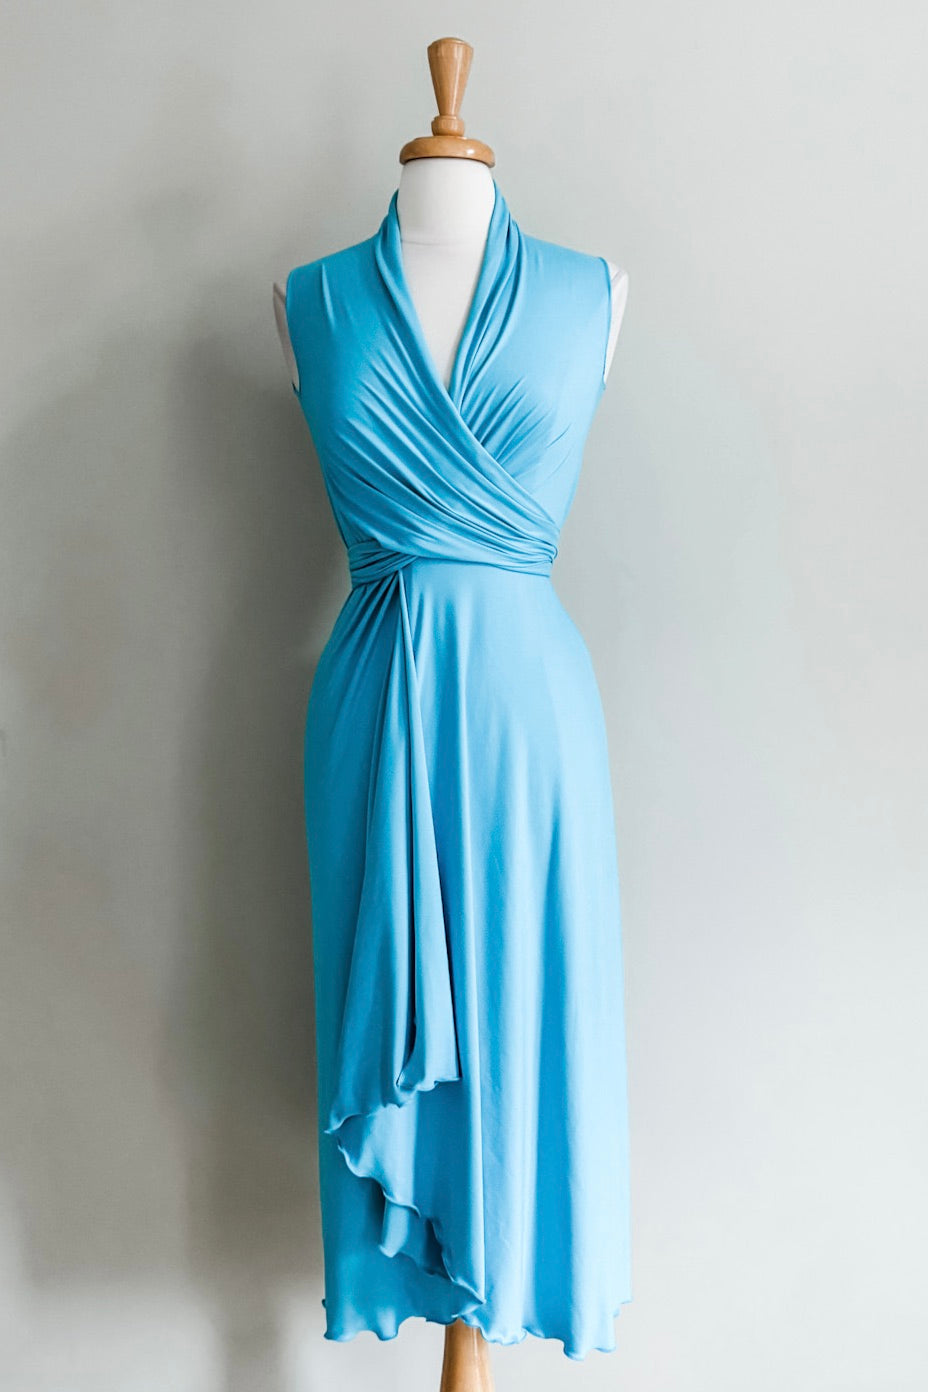 Travel light: how many ways can you wear this Diane Kroe dress? - Auburn  Lane